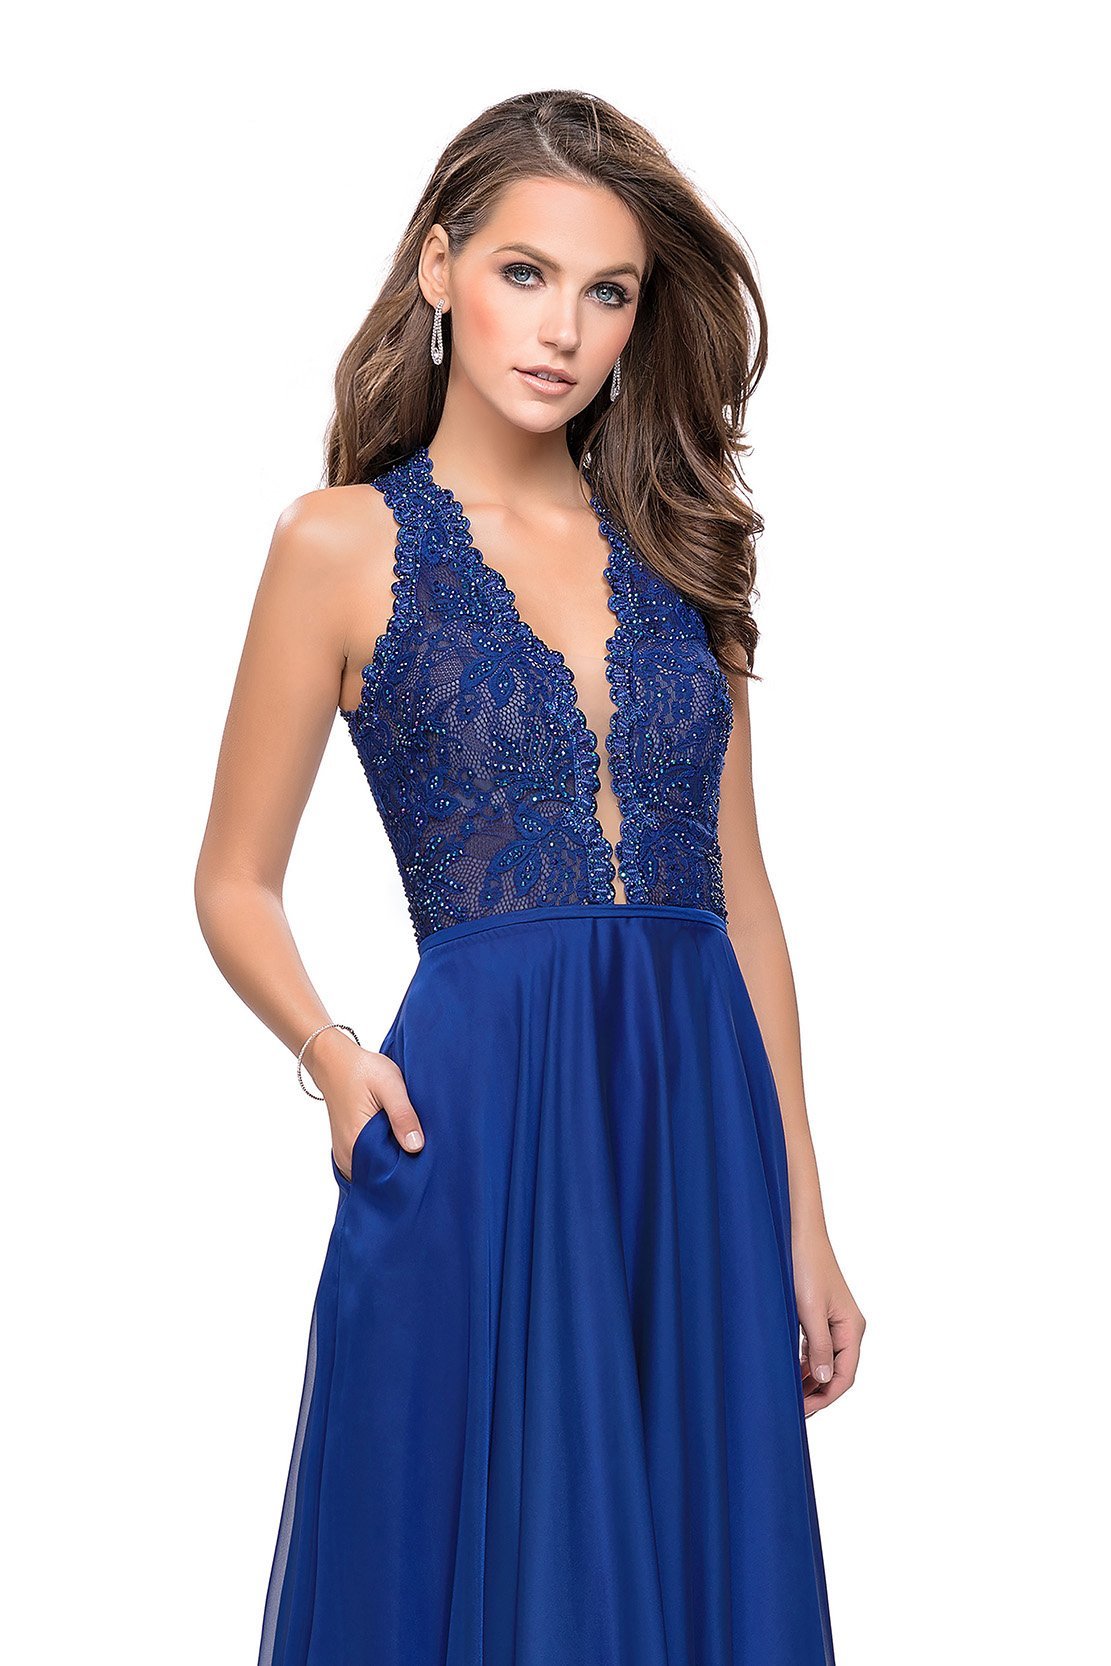 La Femme - Scalloped Plunging Lace Chiffon Dress 25487SC In Blue